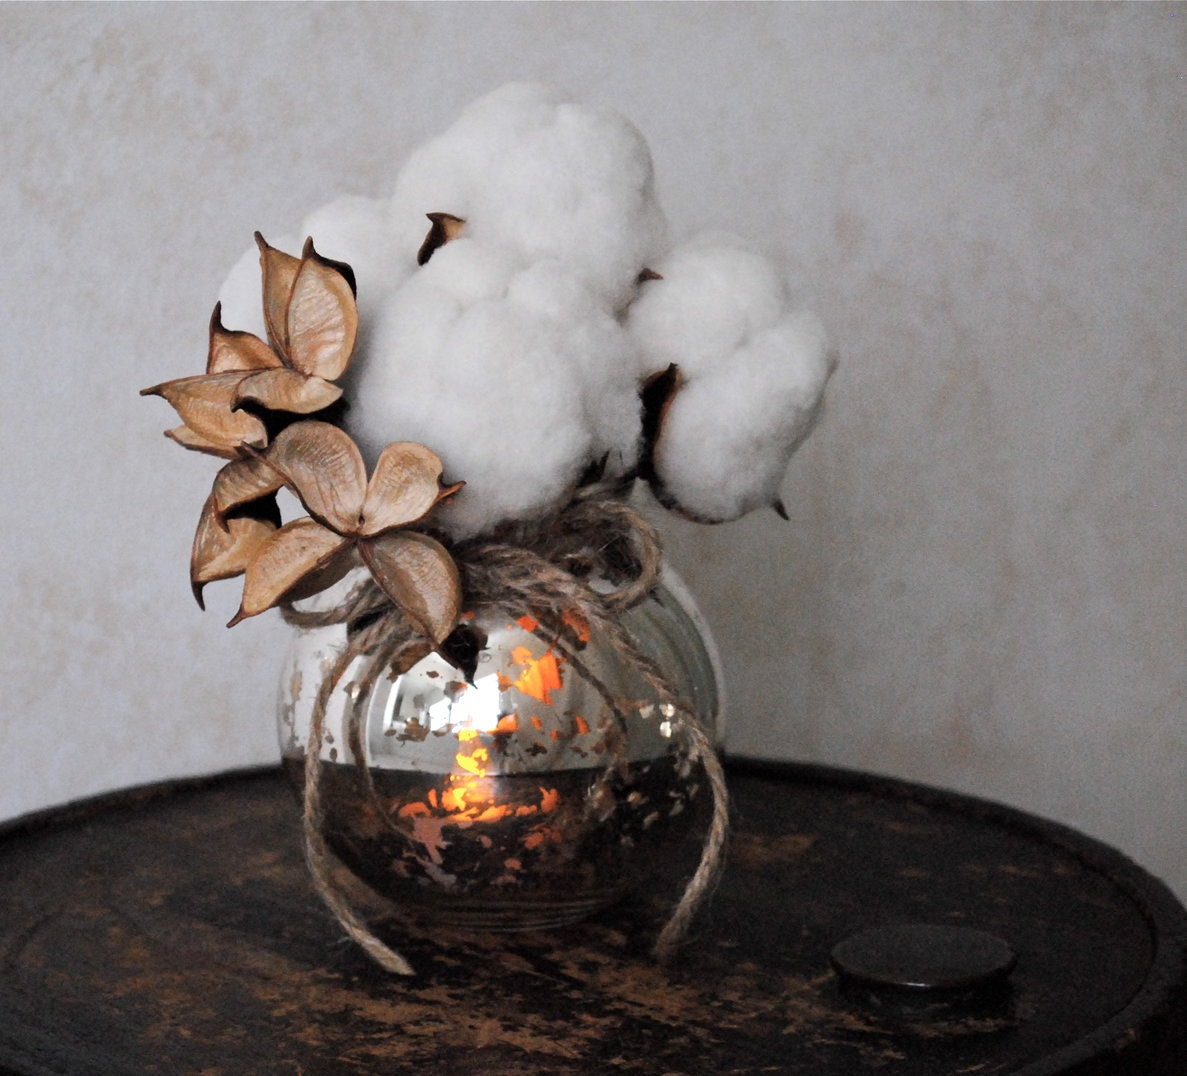 Cotton Boll Bouquet and Mercury Glass Vase - Home Decor - Christmas Decoration - Wedding Decoration - Anniversary Gift - Centerpiece